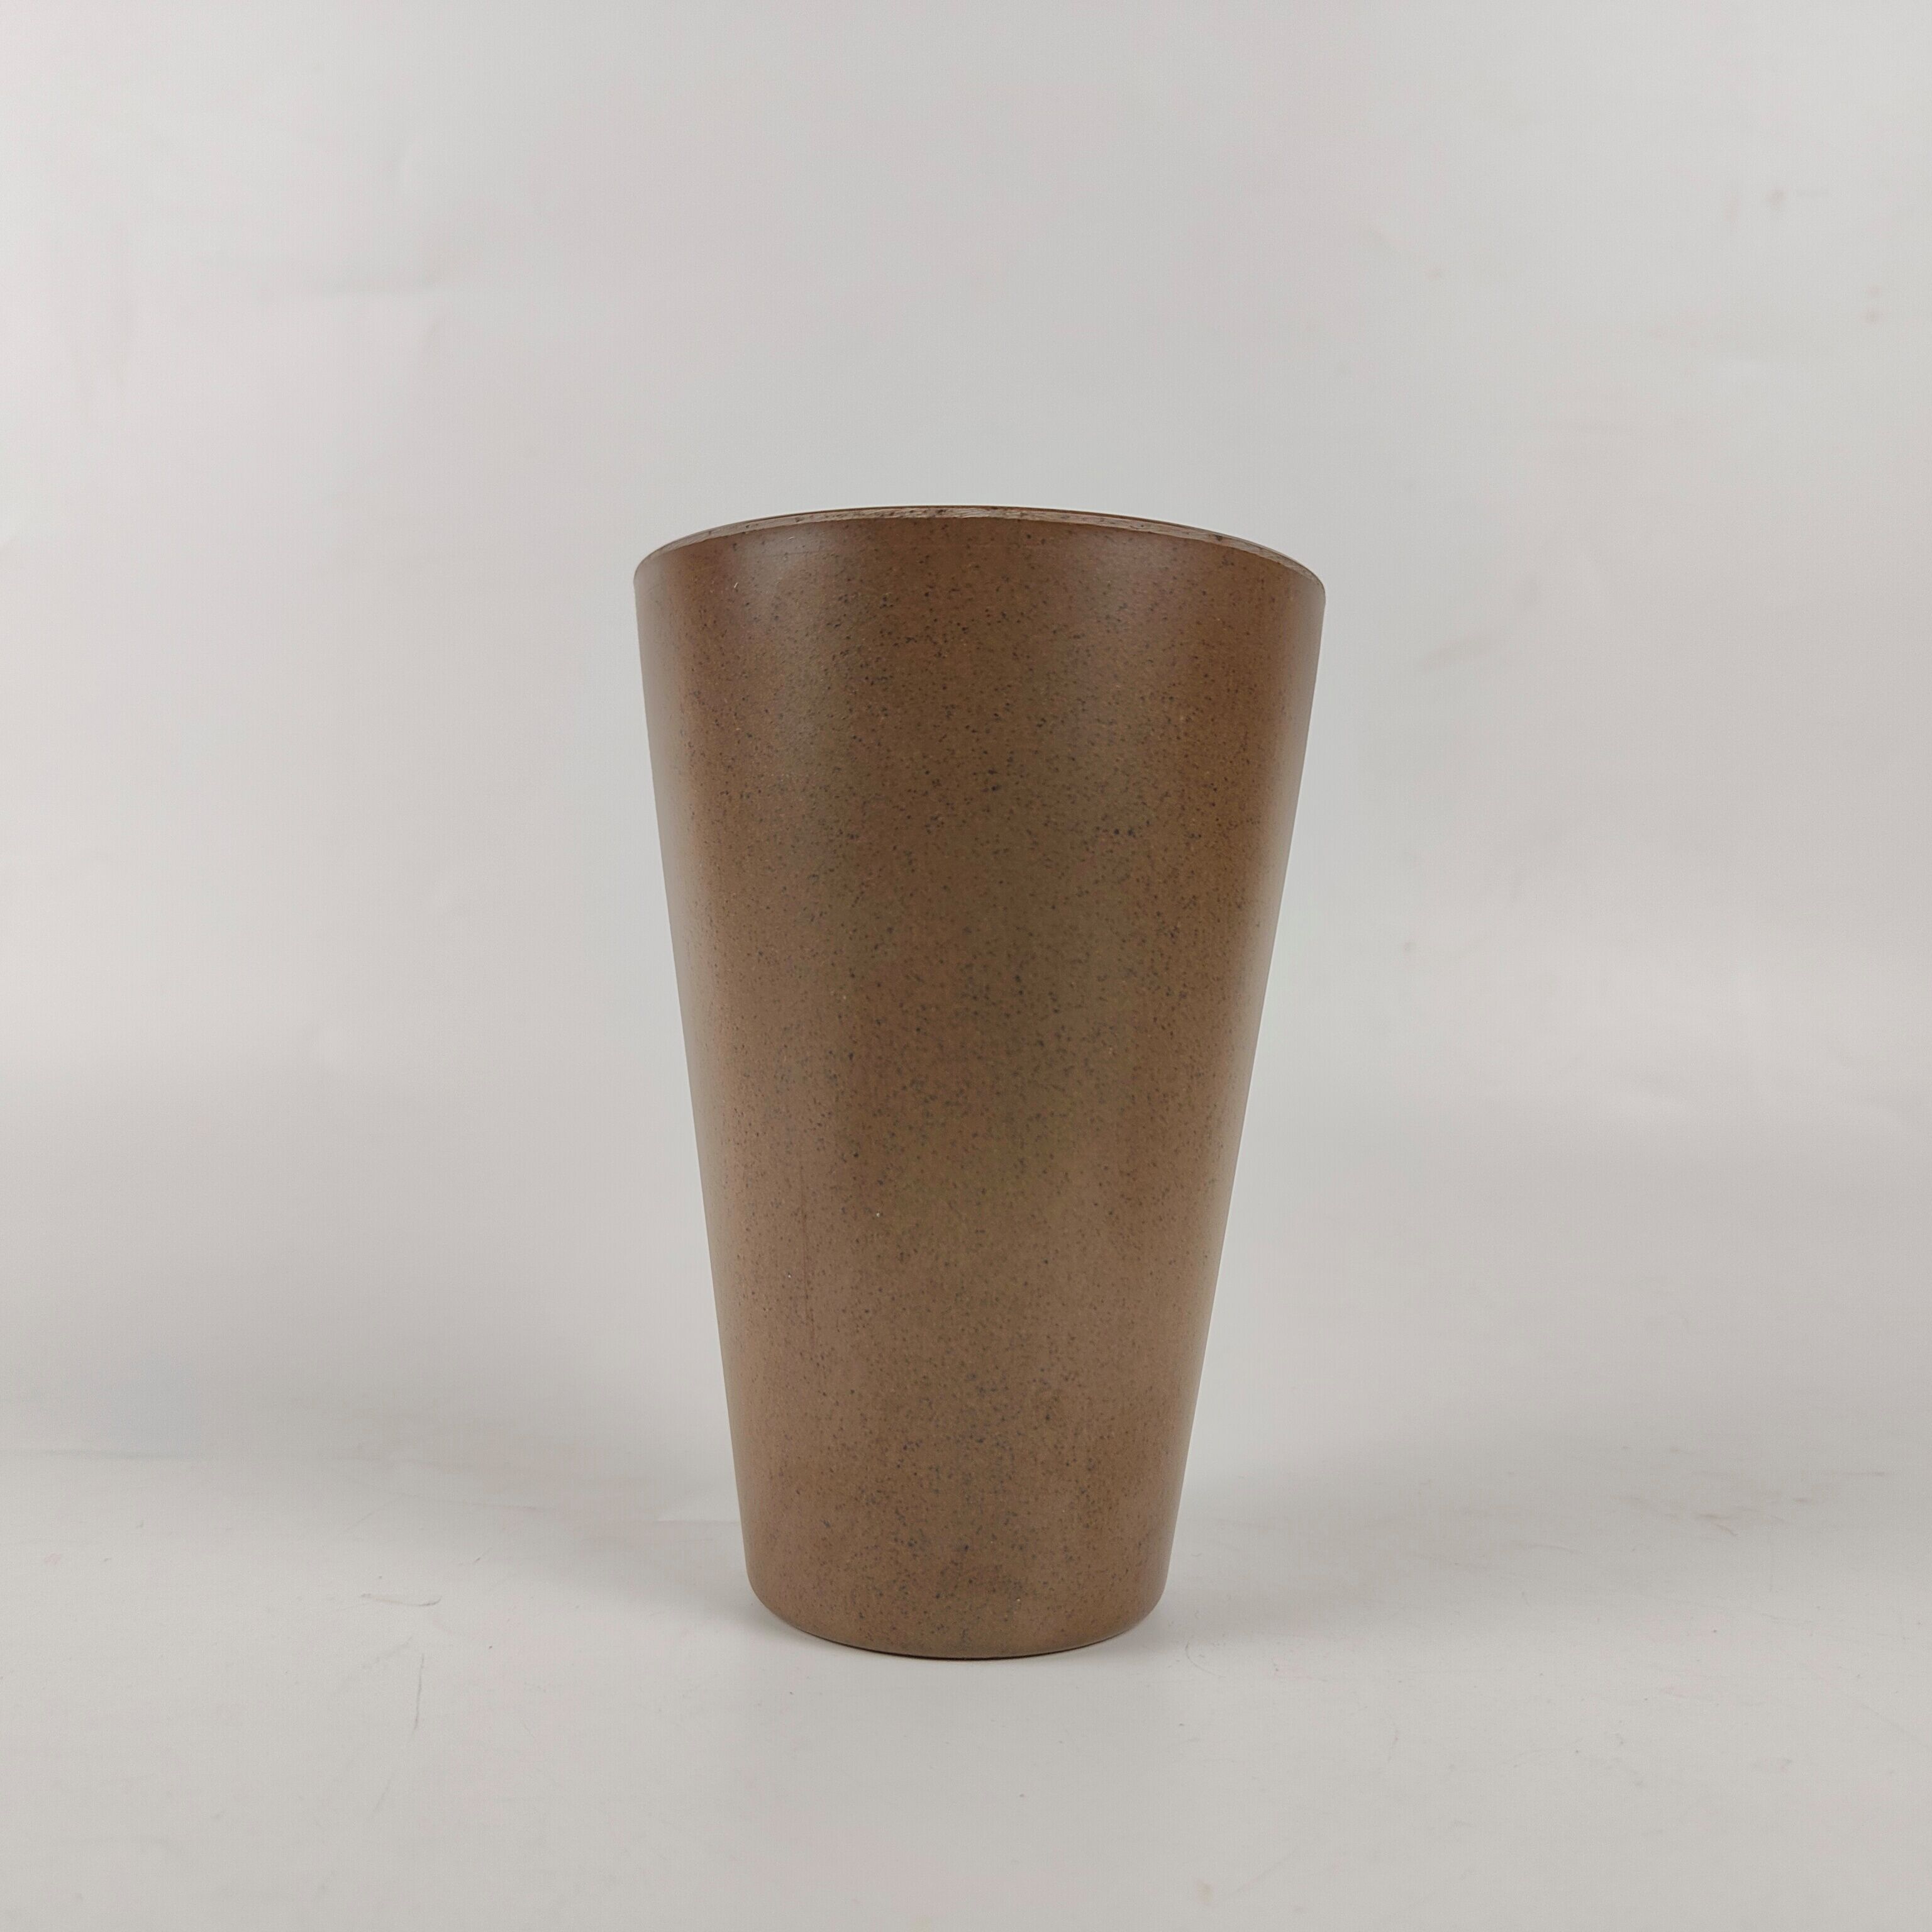 THVALUE Wholesale 450ml Coffee Grounds Melamine Mug Cup Eco-Friendly Bamboo Travel Mug Coffee Mugs With Silicone Lid 